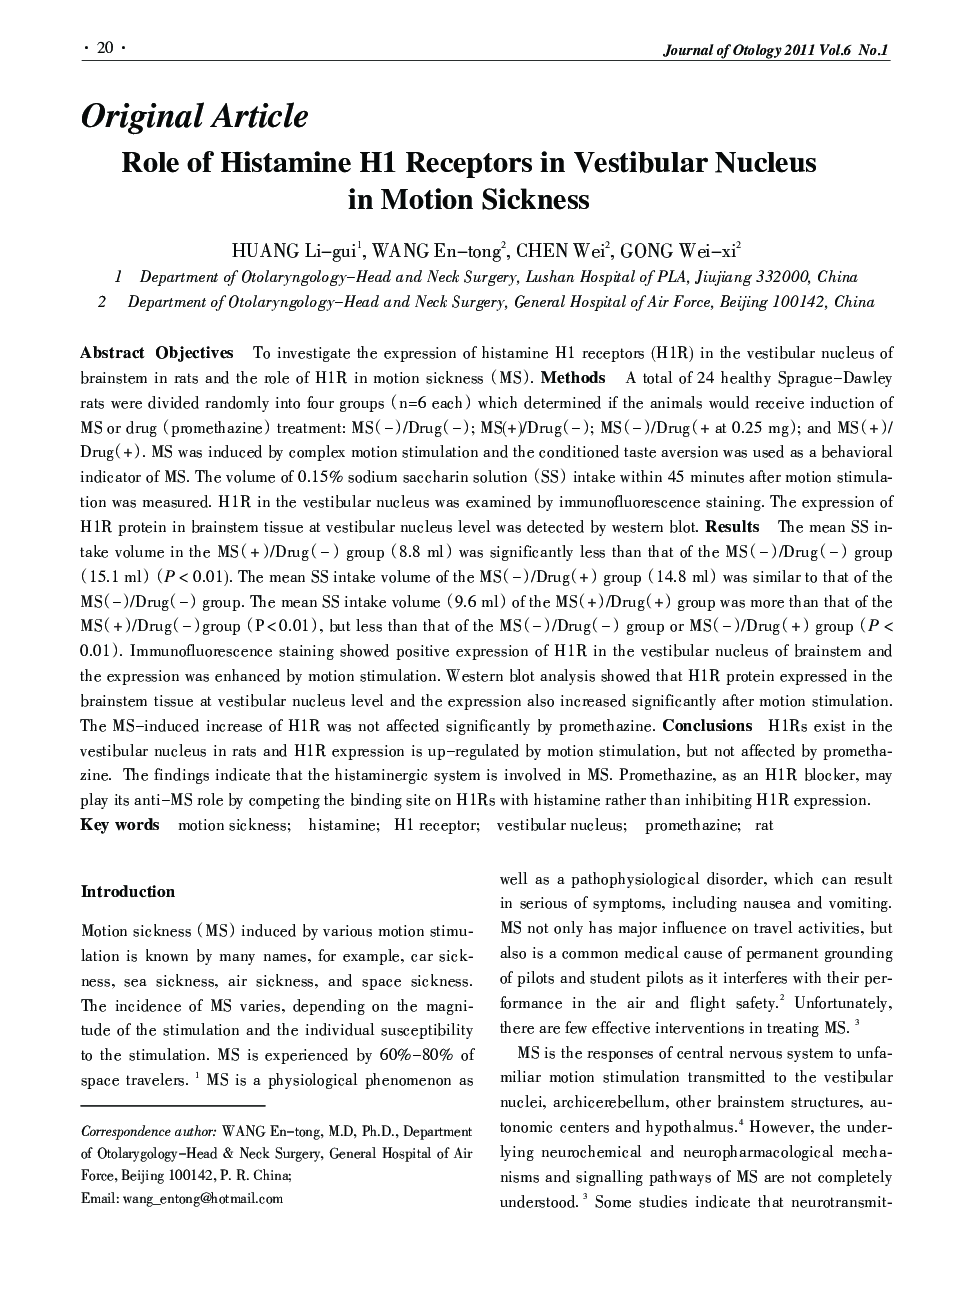 Role of Histamine H1 Receptors in Vestibular Nucleus in Motion Sickness